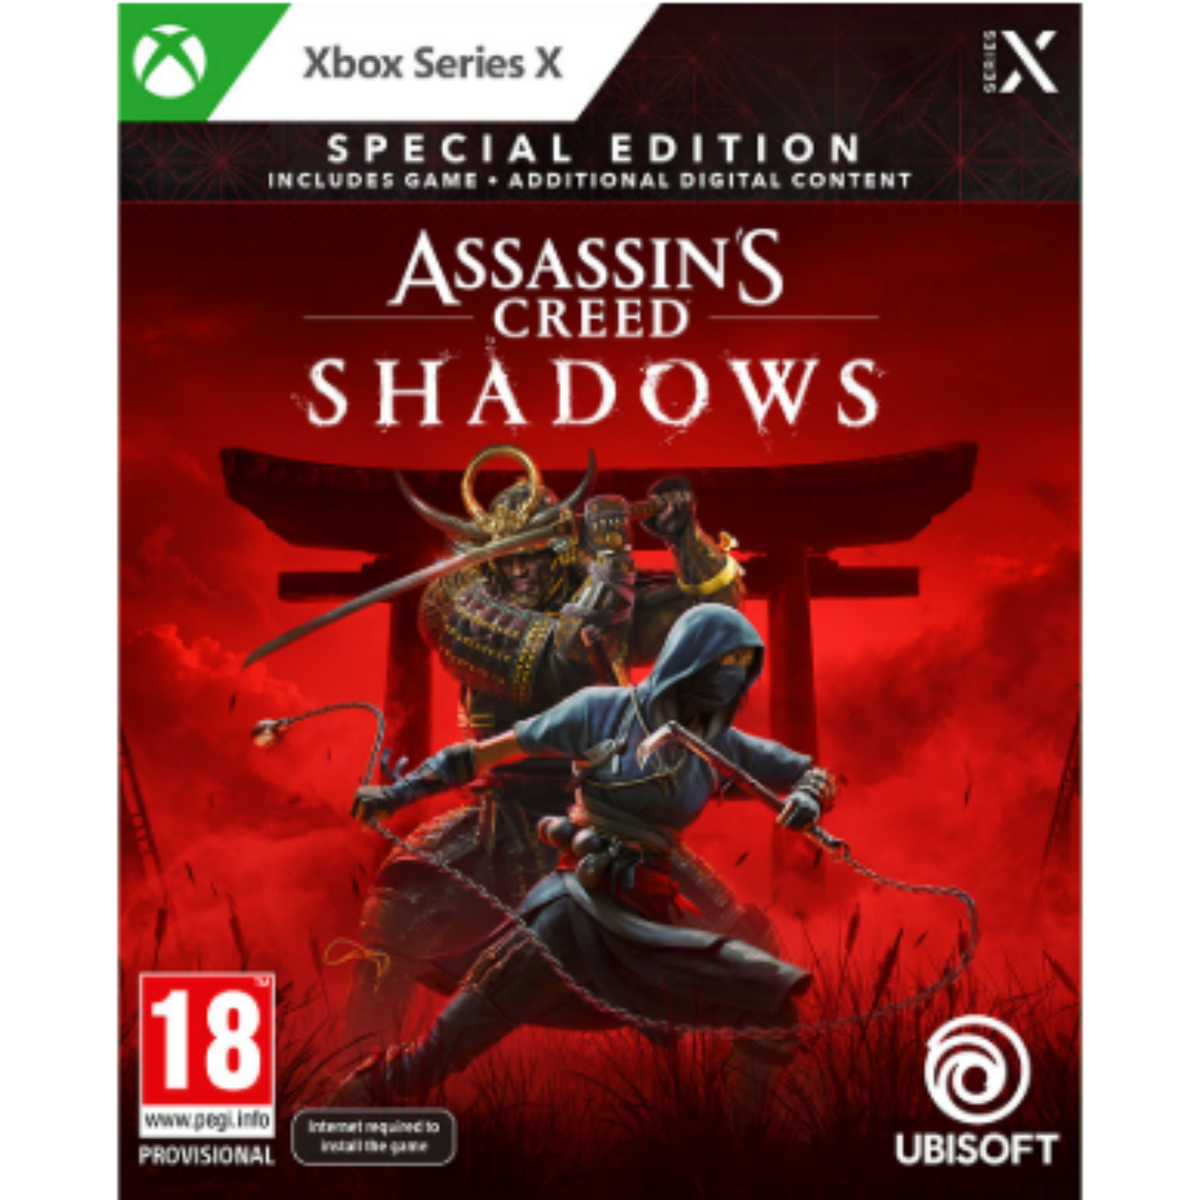 Assasins Creed Shadows Edition for Xbox